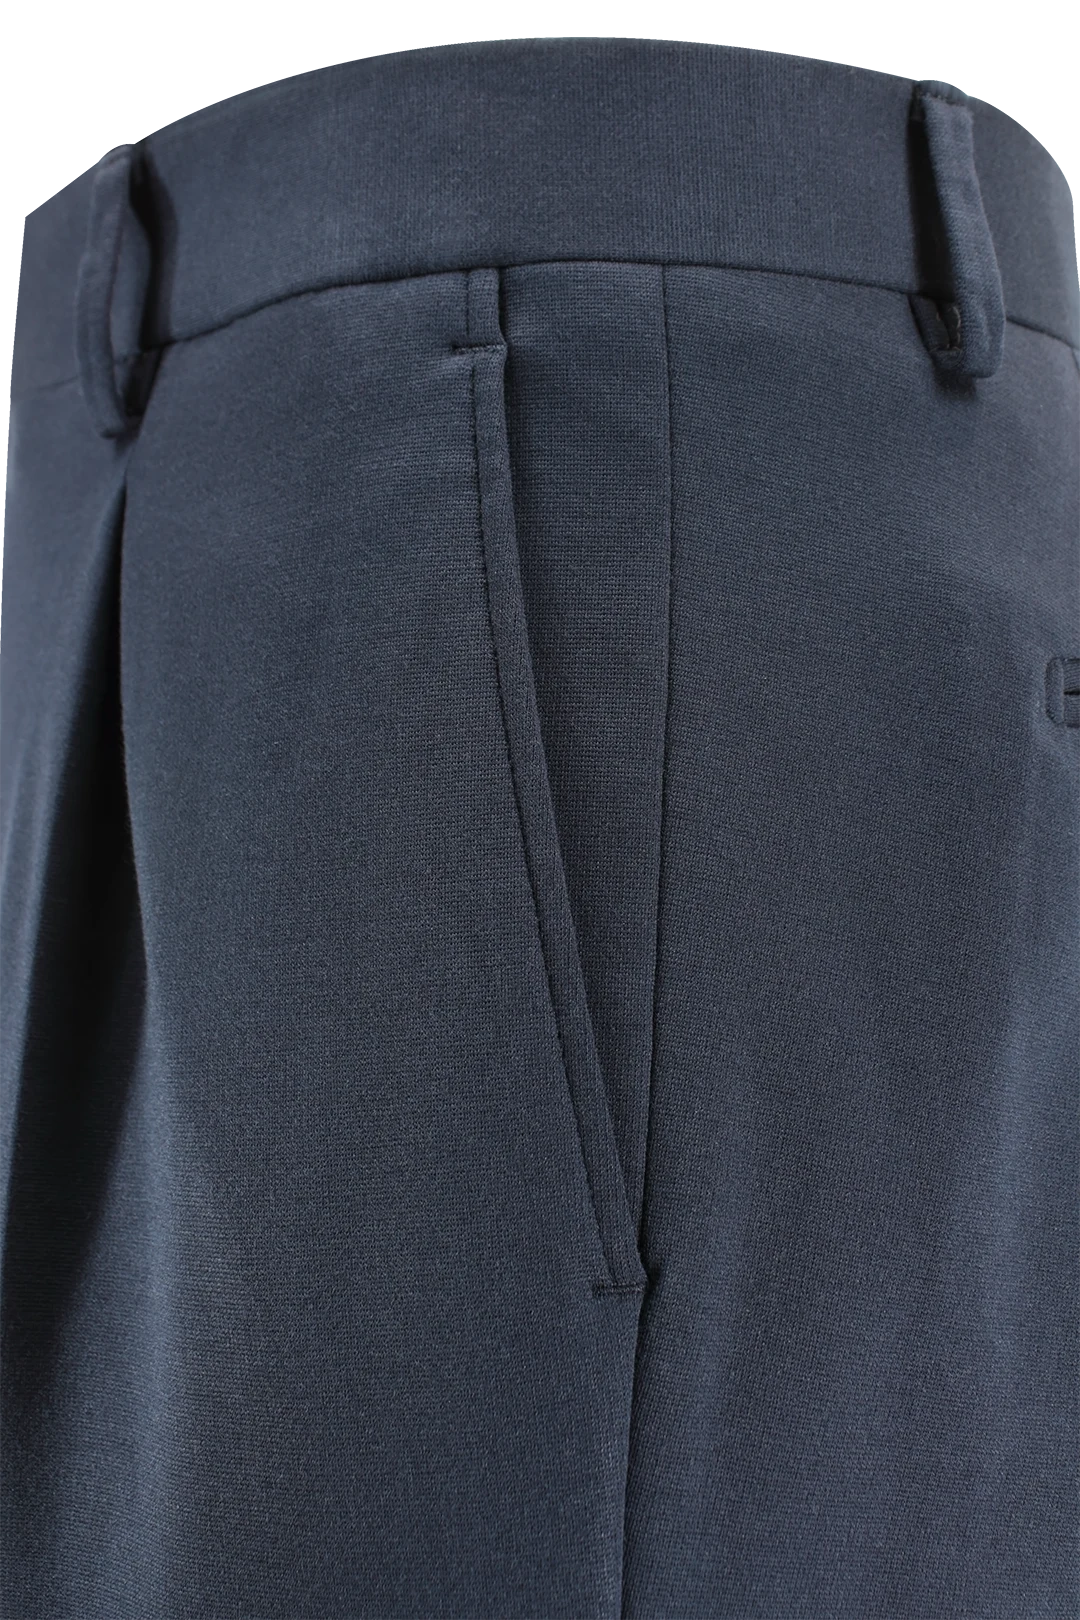 Pantalone con pince in jersey blu tasca